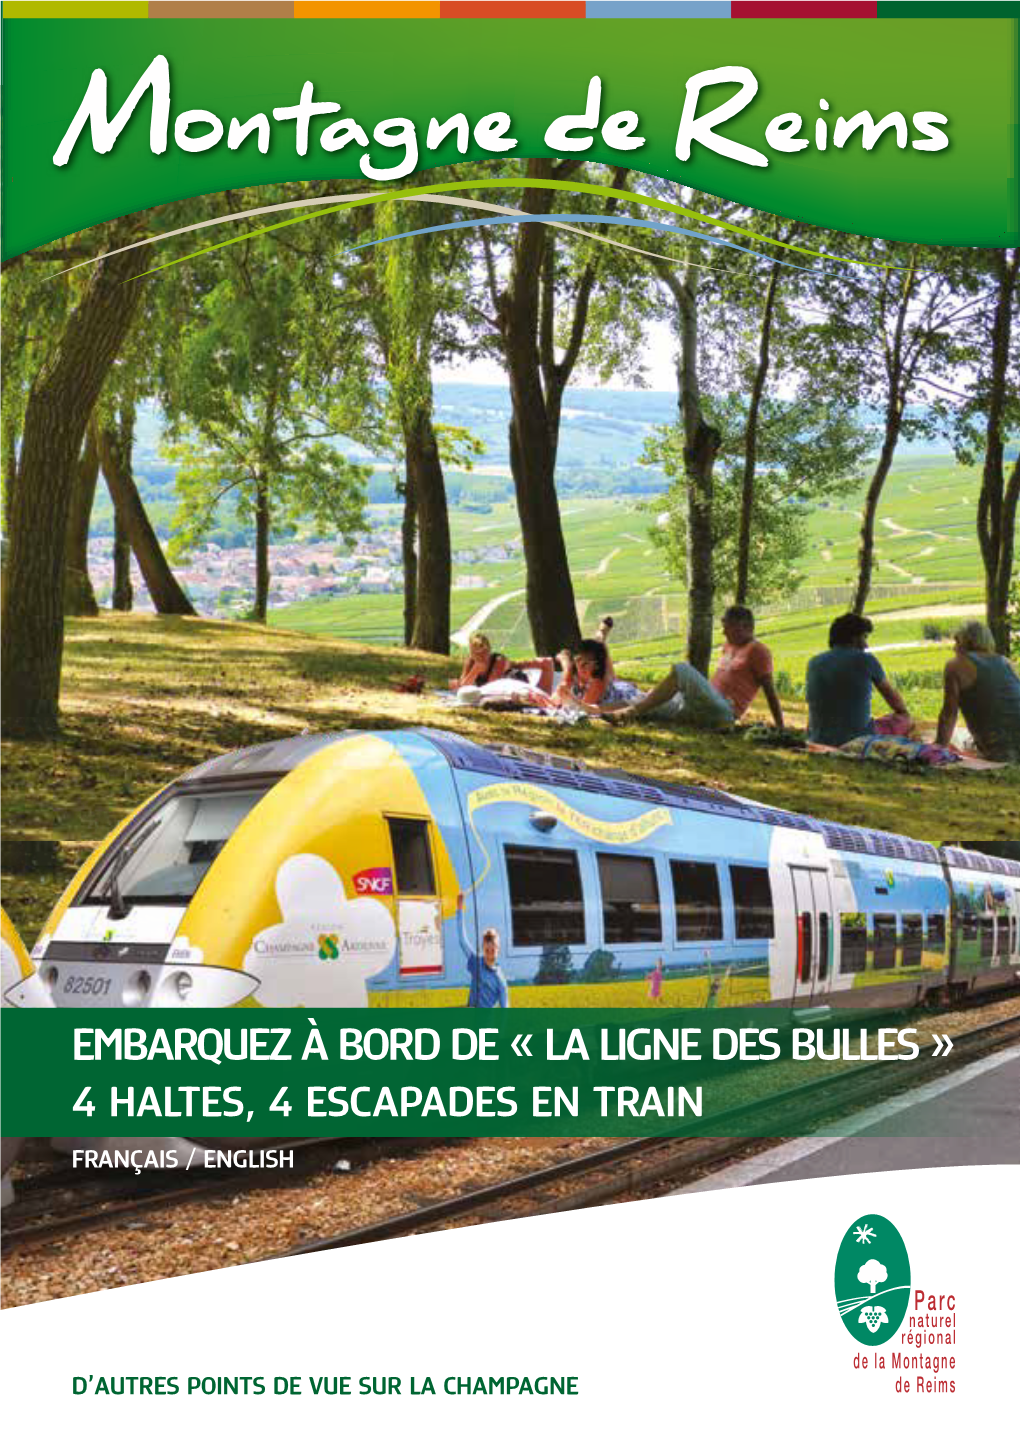 Embarquez À Bord De « La Ligne Des Bulles » 4 Haltes, 4 Escapades En Train Français / English